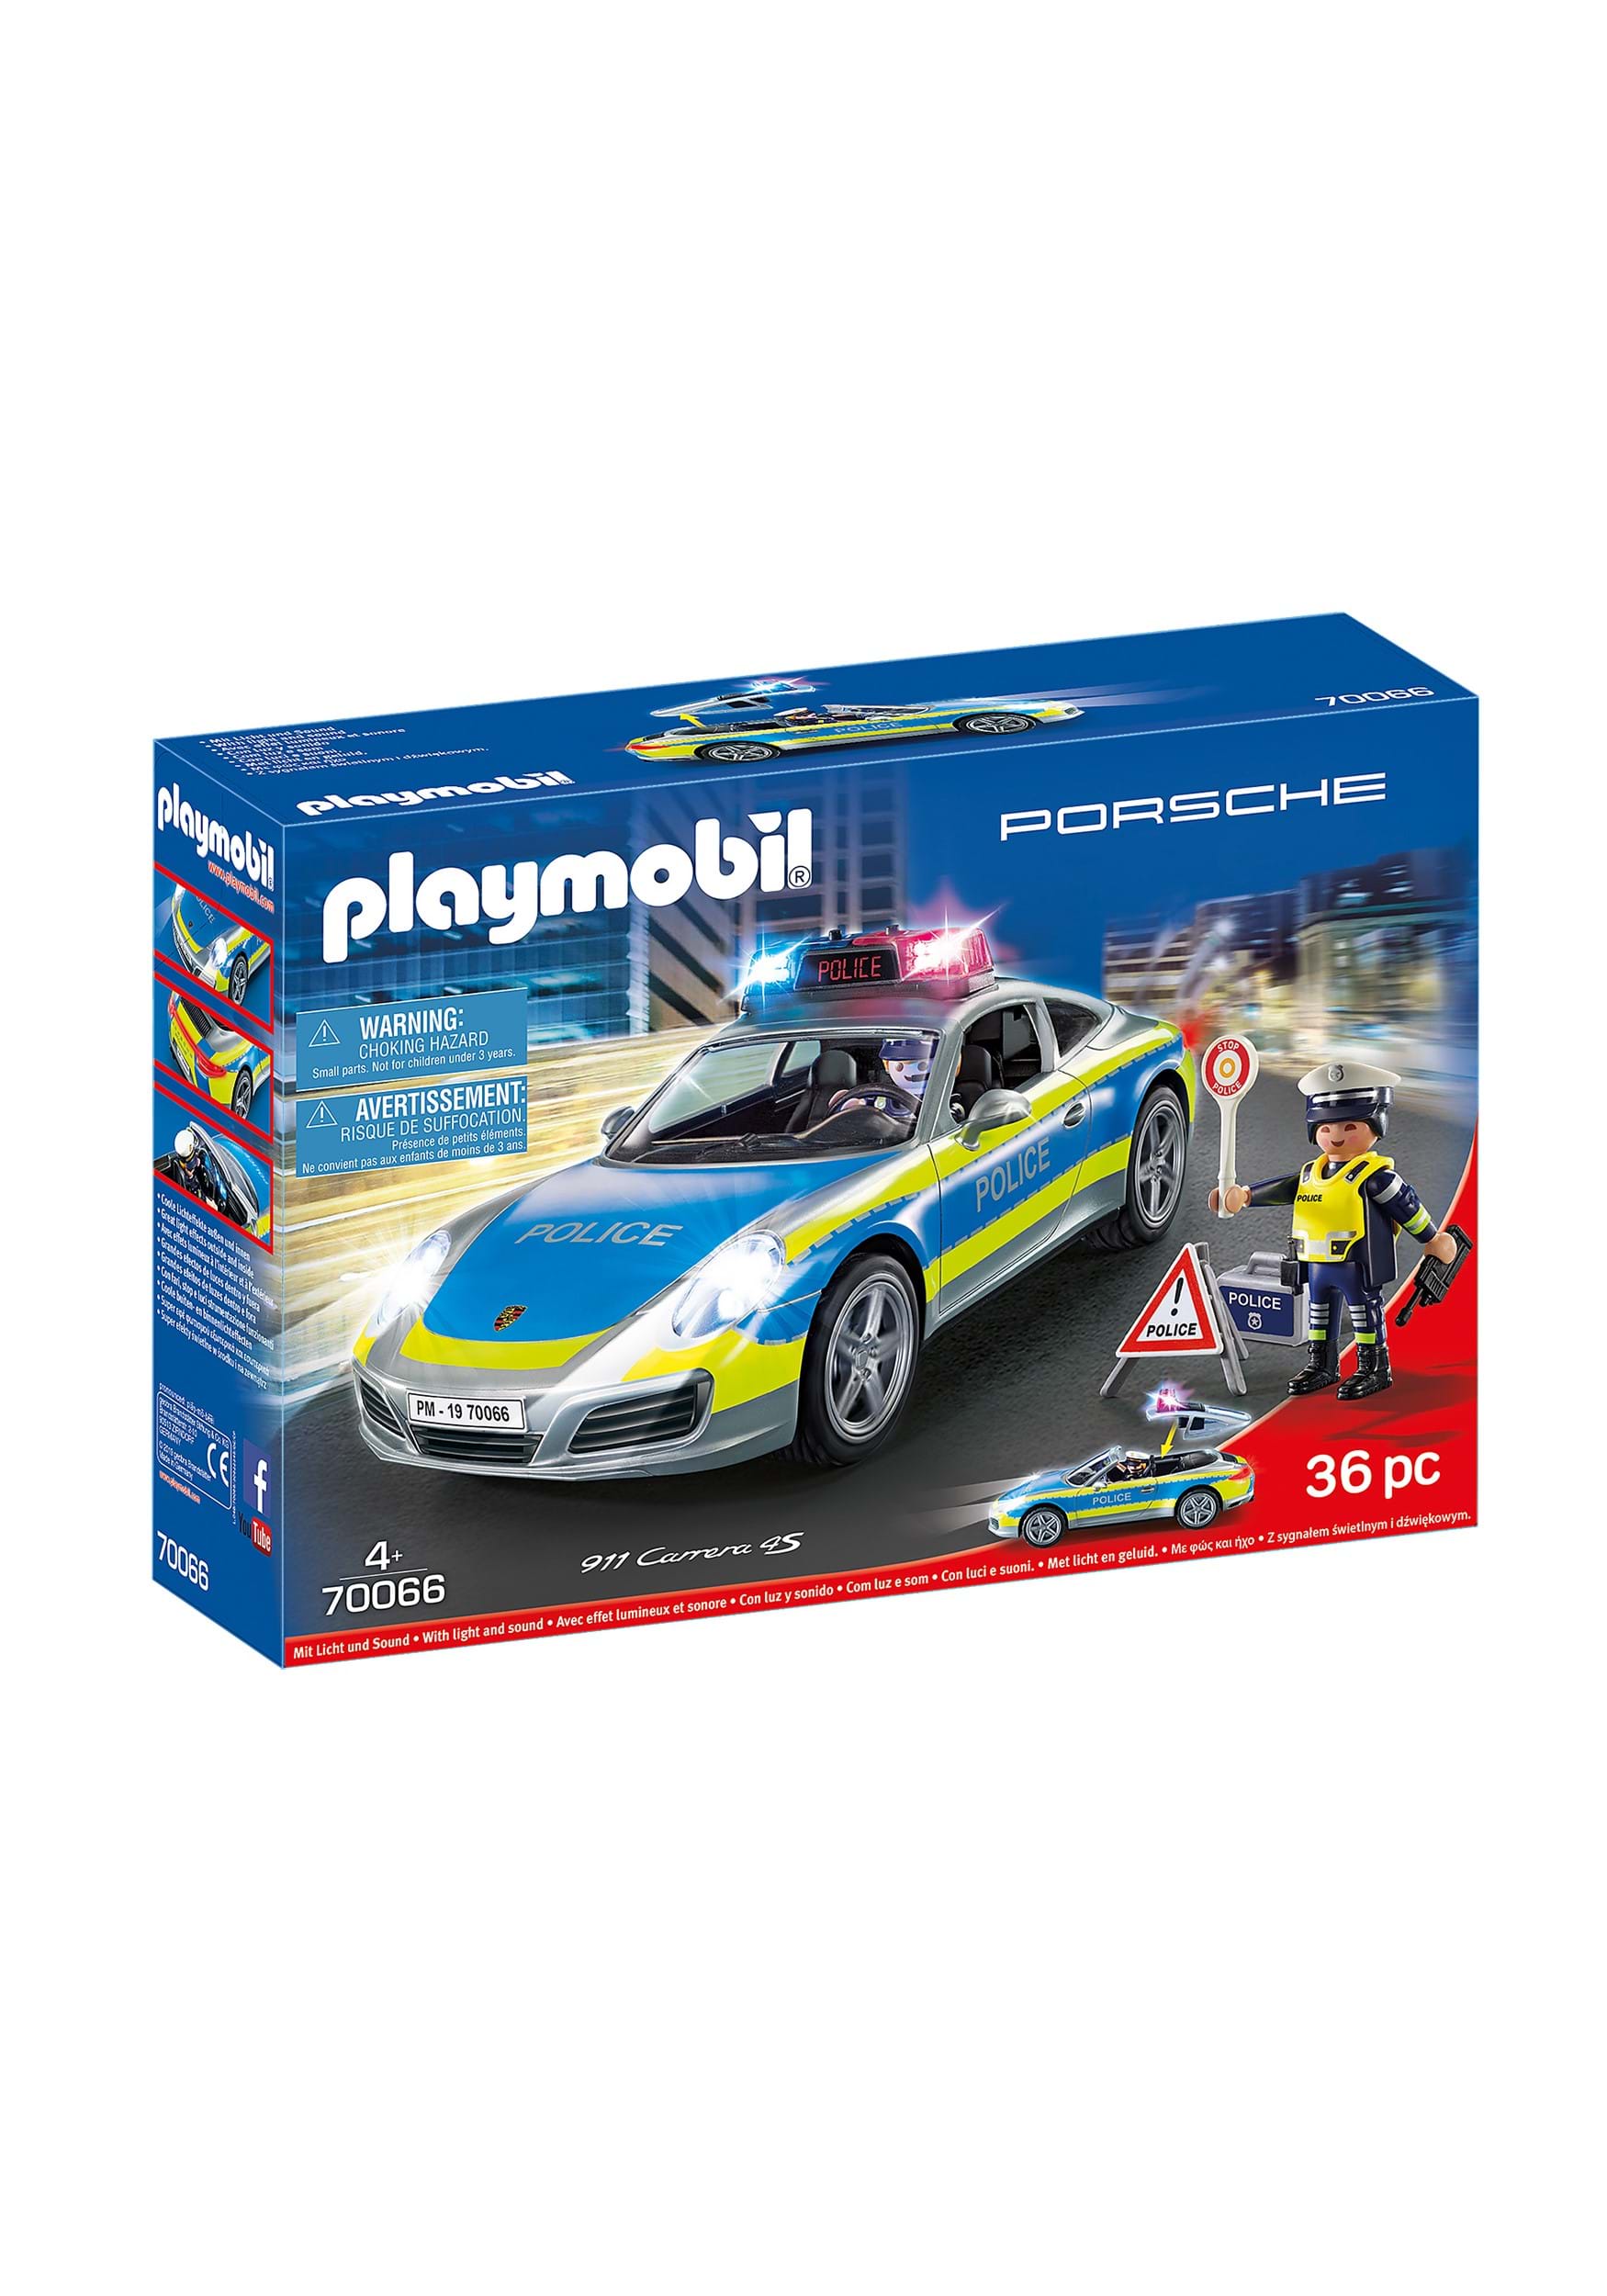 Porsche 911 Carrera 4S Police Playmobil Playset